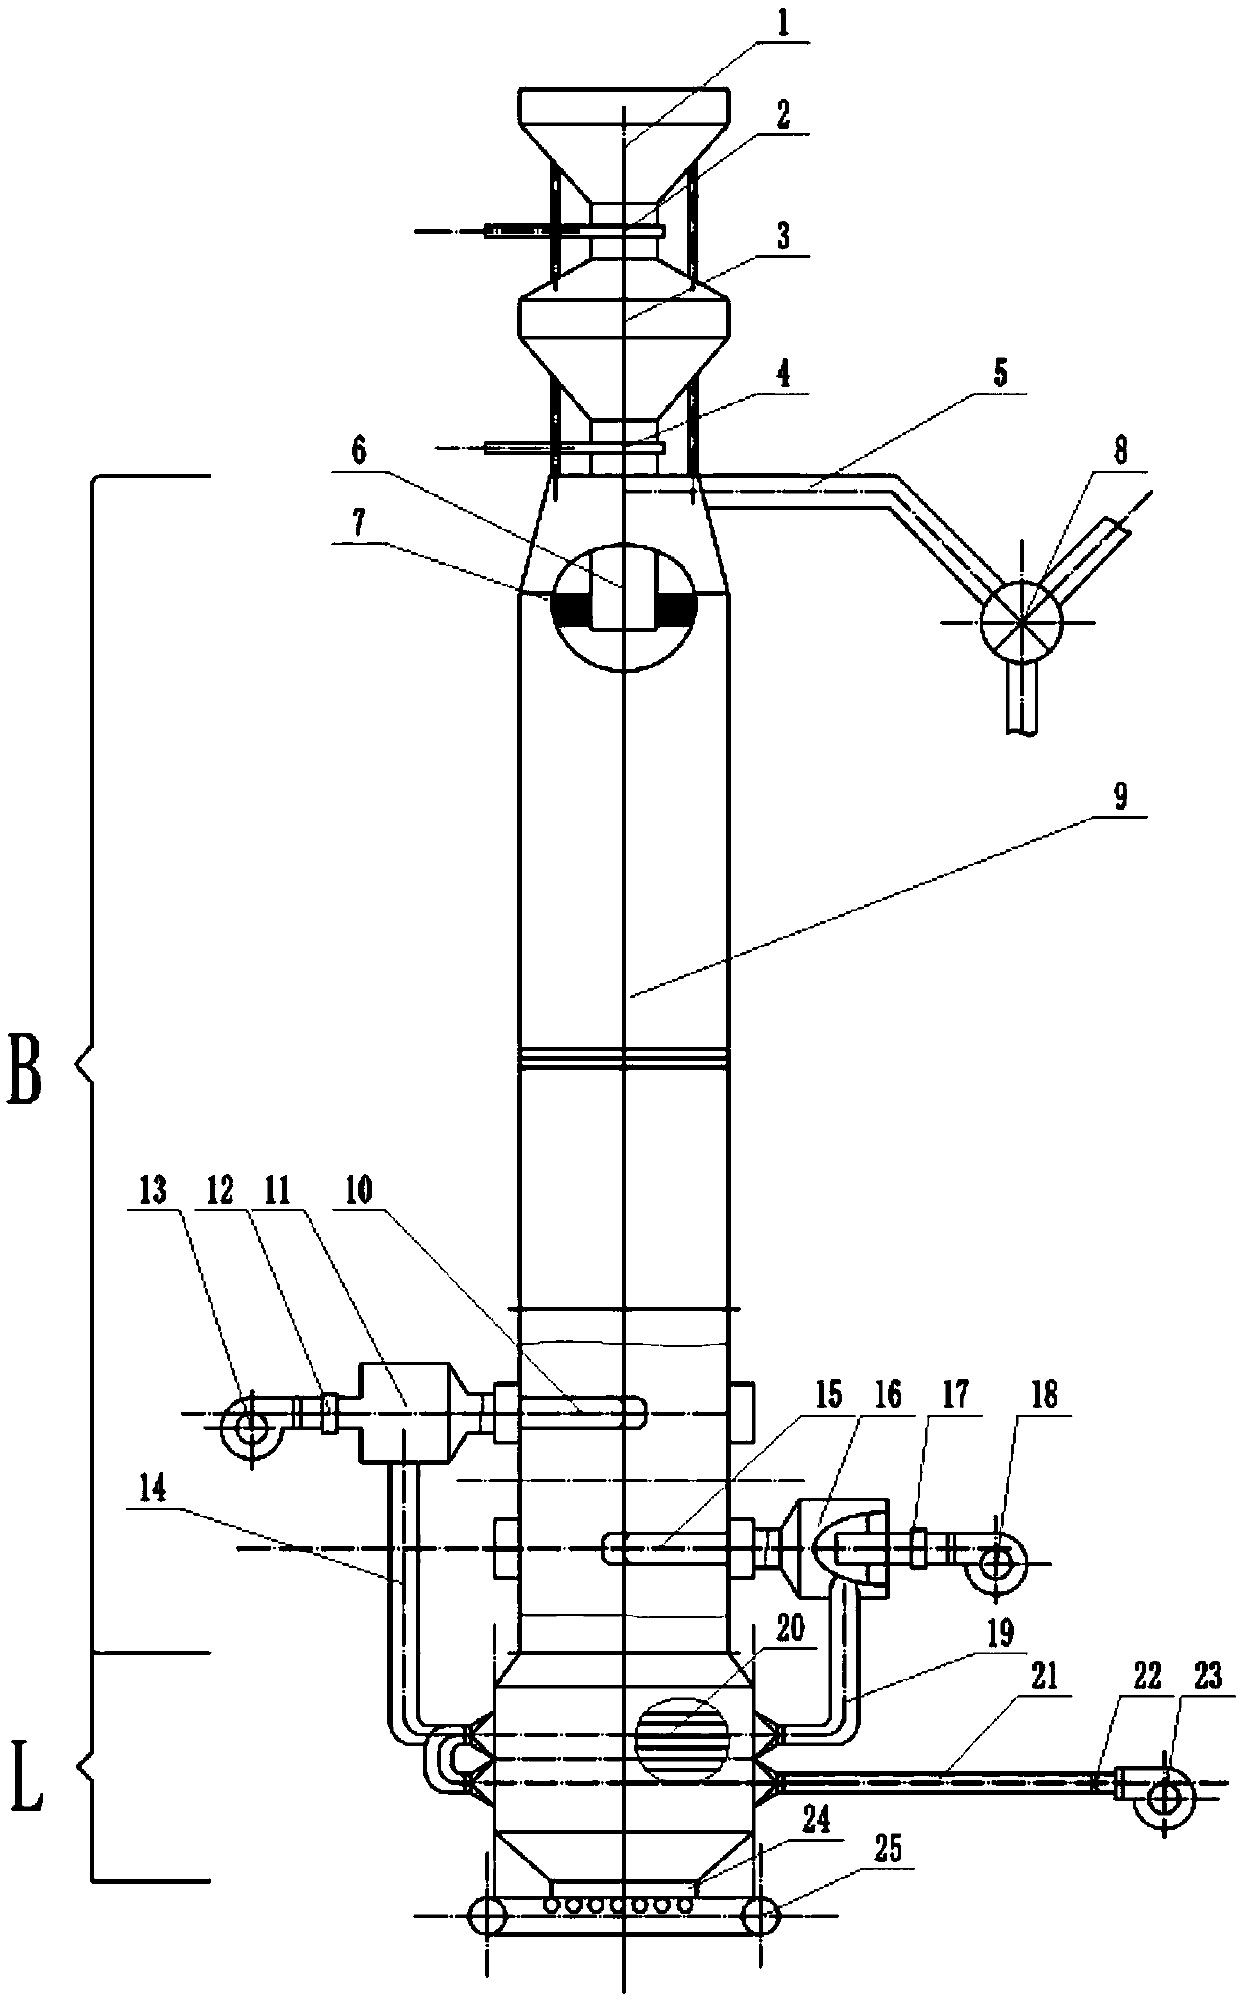 Novel aluminium oxide vertical activation roasting device and roasting method